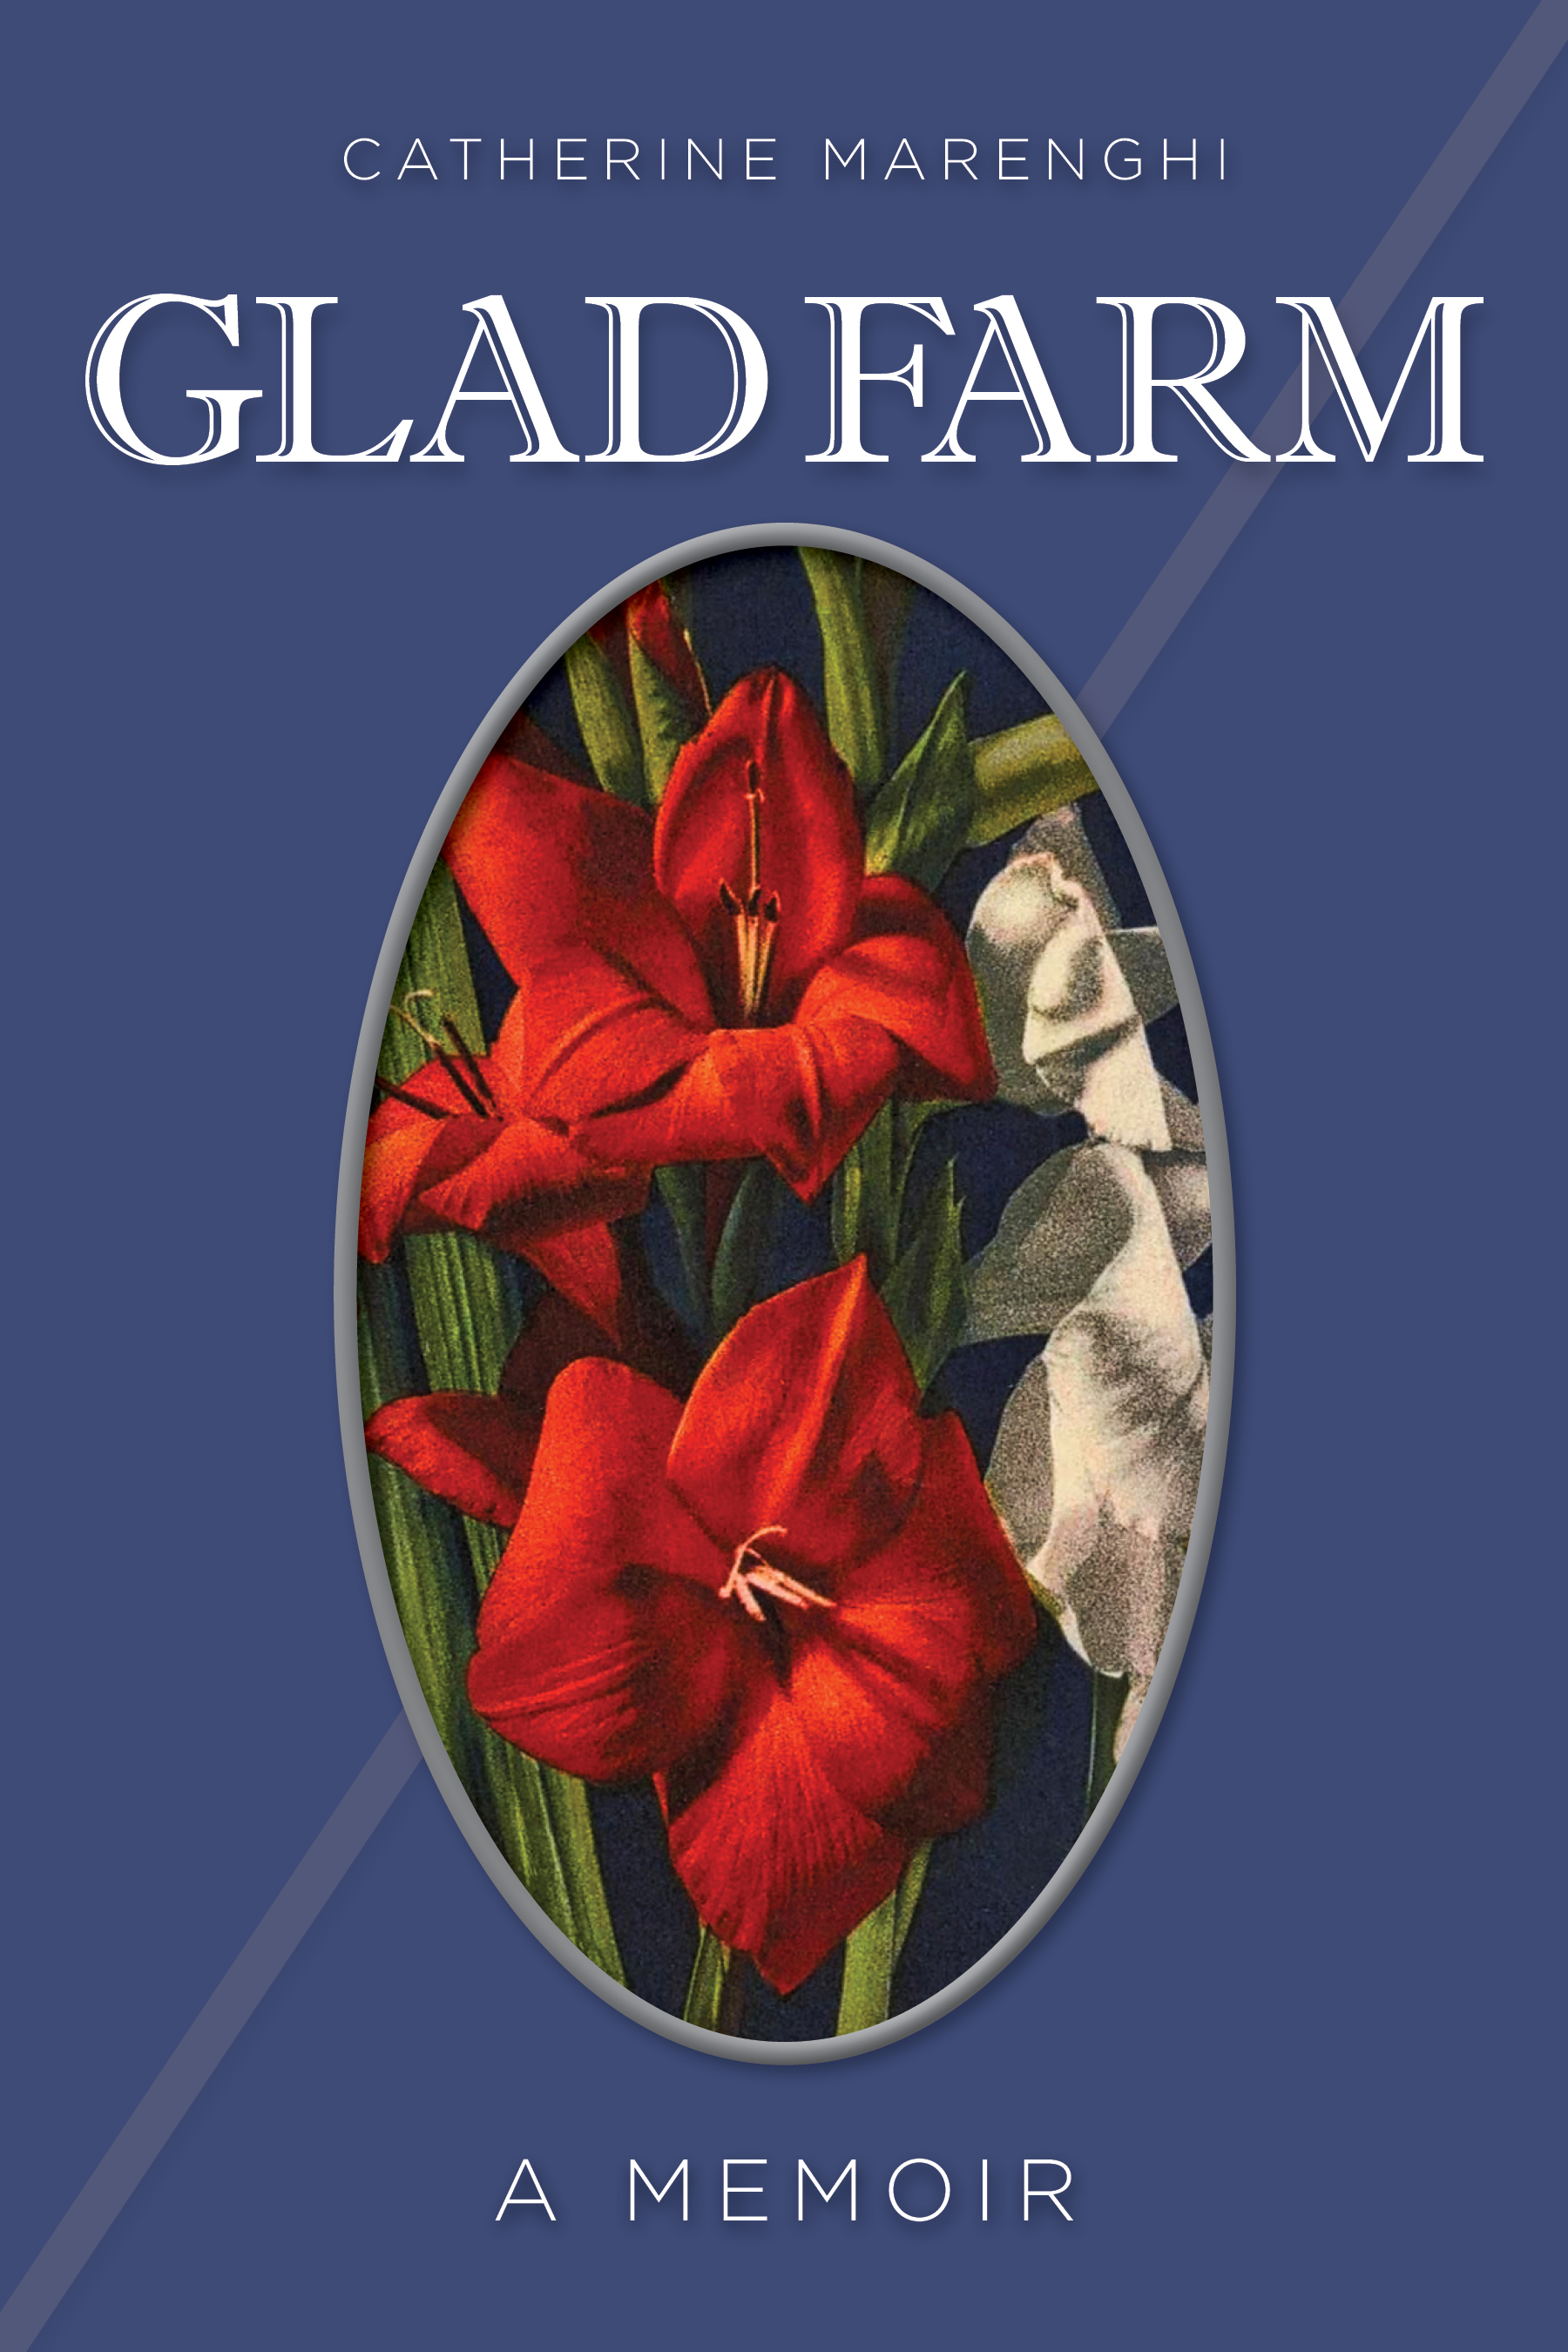 GLAD FARM: revised cover concept #1